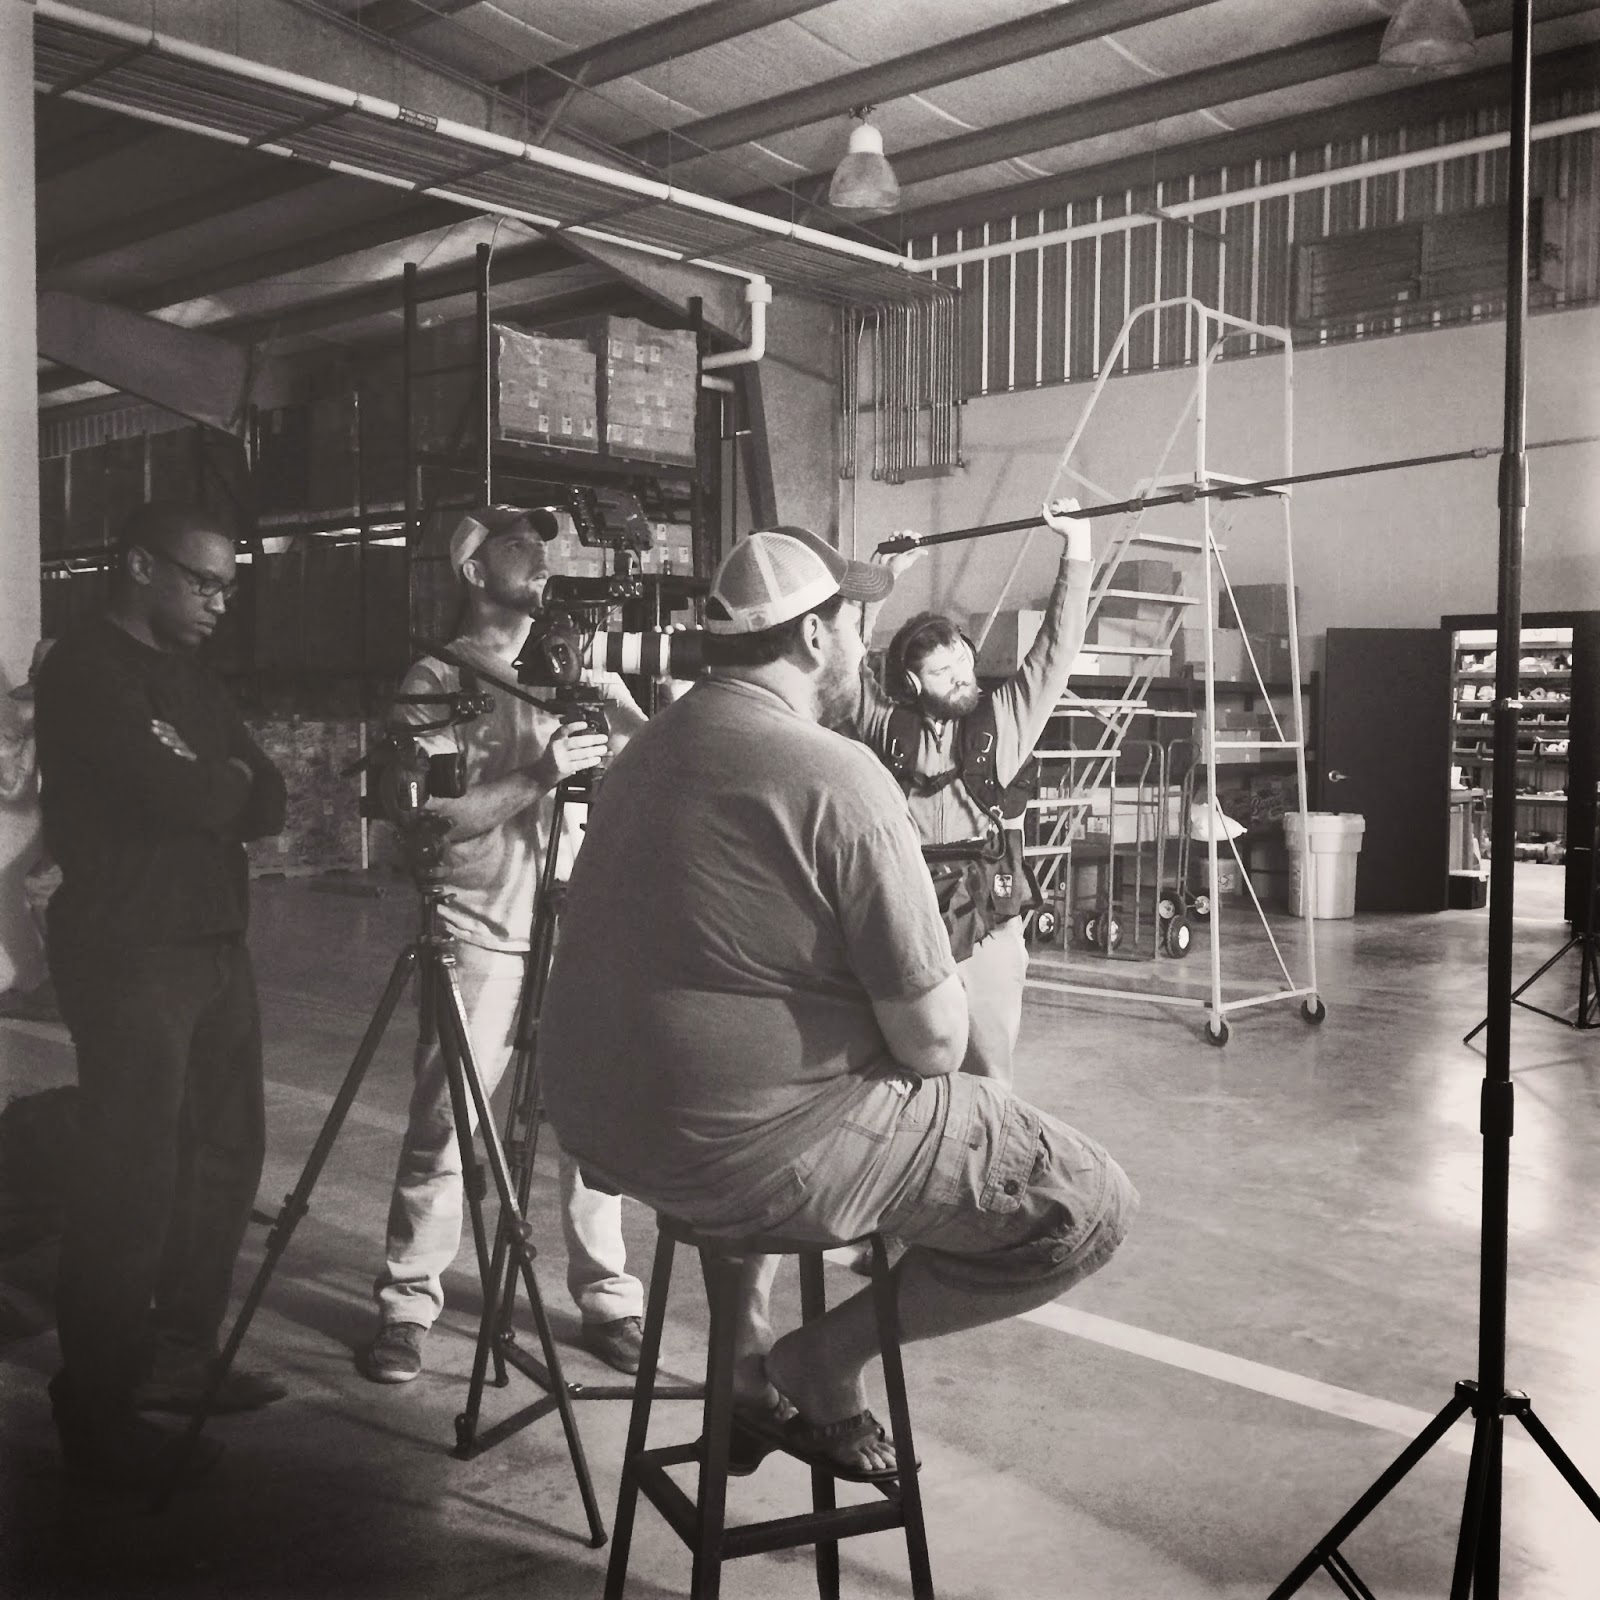 Dan Jones, Fred Mince, Jay Ducote, and Jordan Lewis getting footage at the Bayou Rum distillery